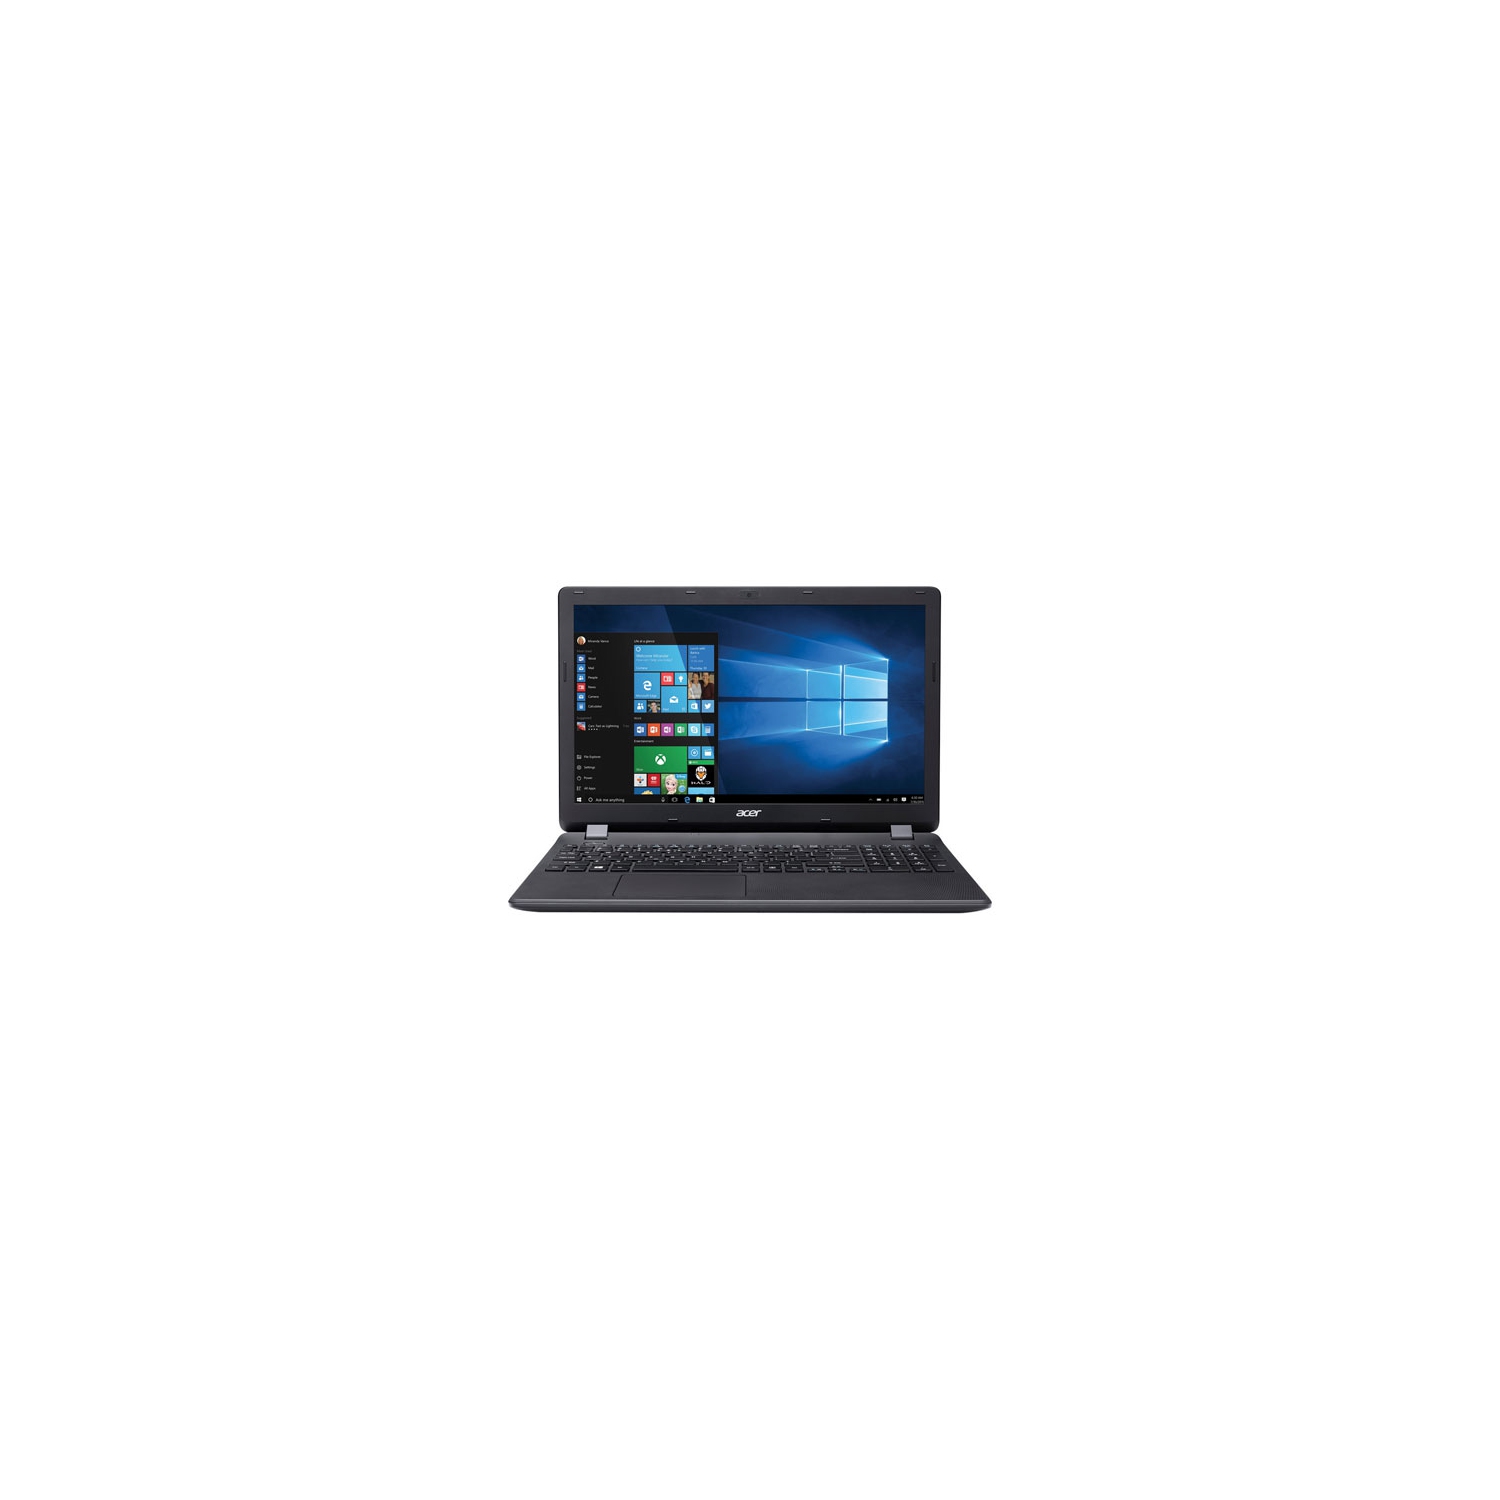 Refurbished (Fair) - Acer Aspire ES 15.6" Laptop (Intel Celeron N3050 / 500GB HDD / 4GB RAM / Windows 10 Home)